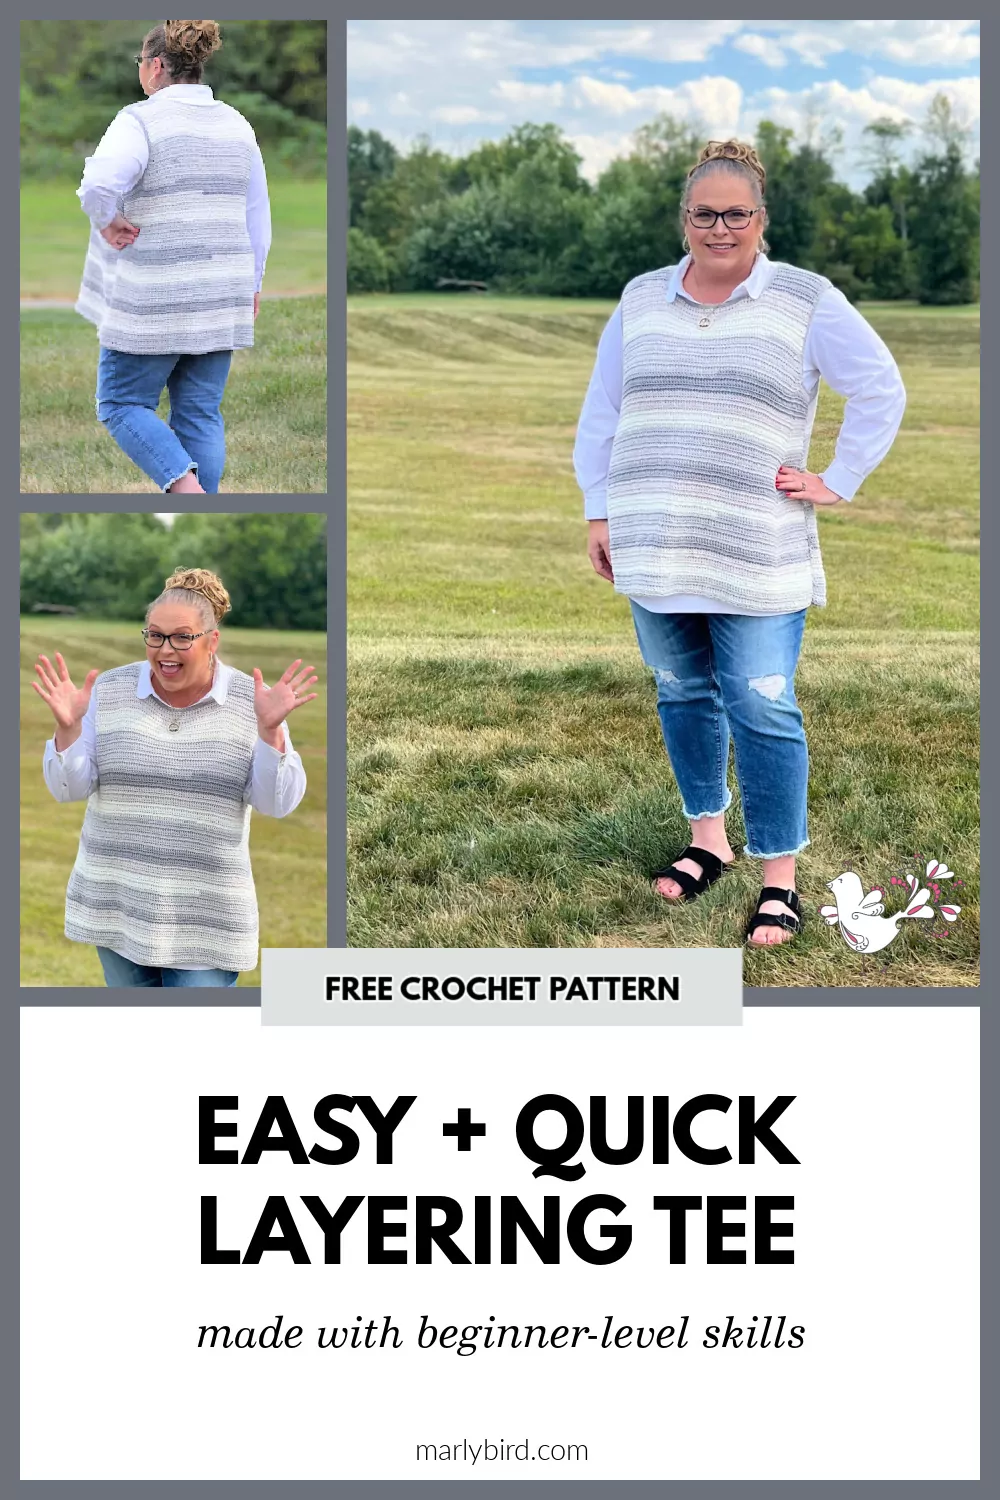 Plus Size Crochet Top Patterns FREE